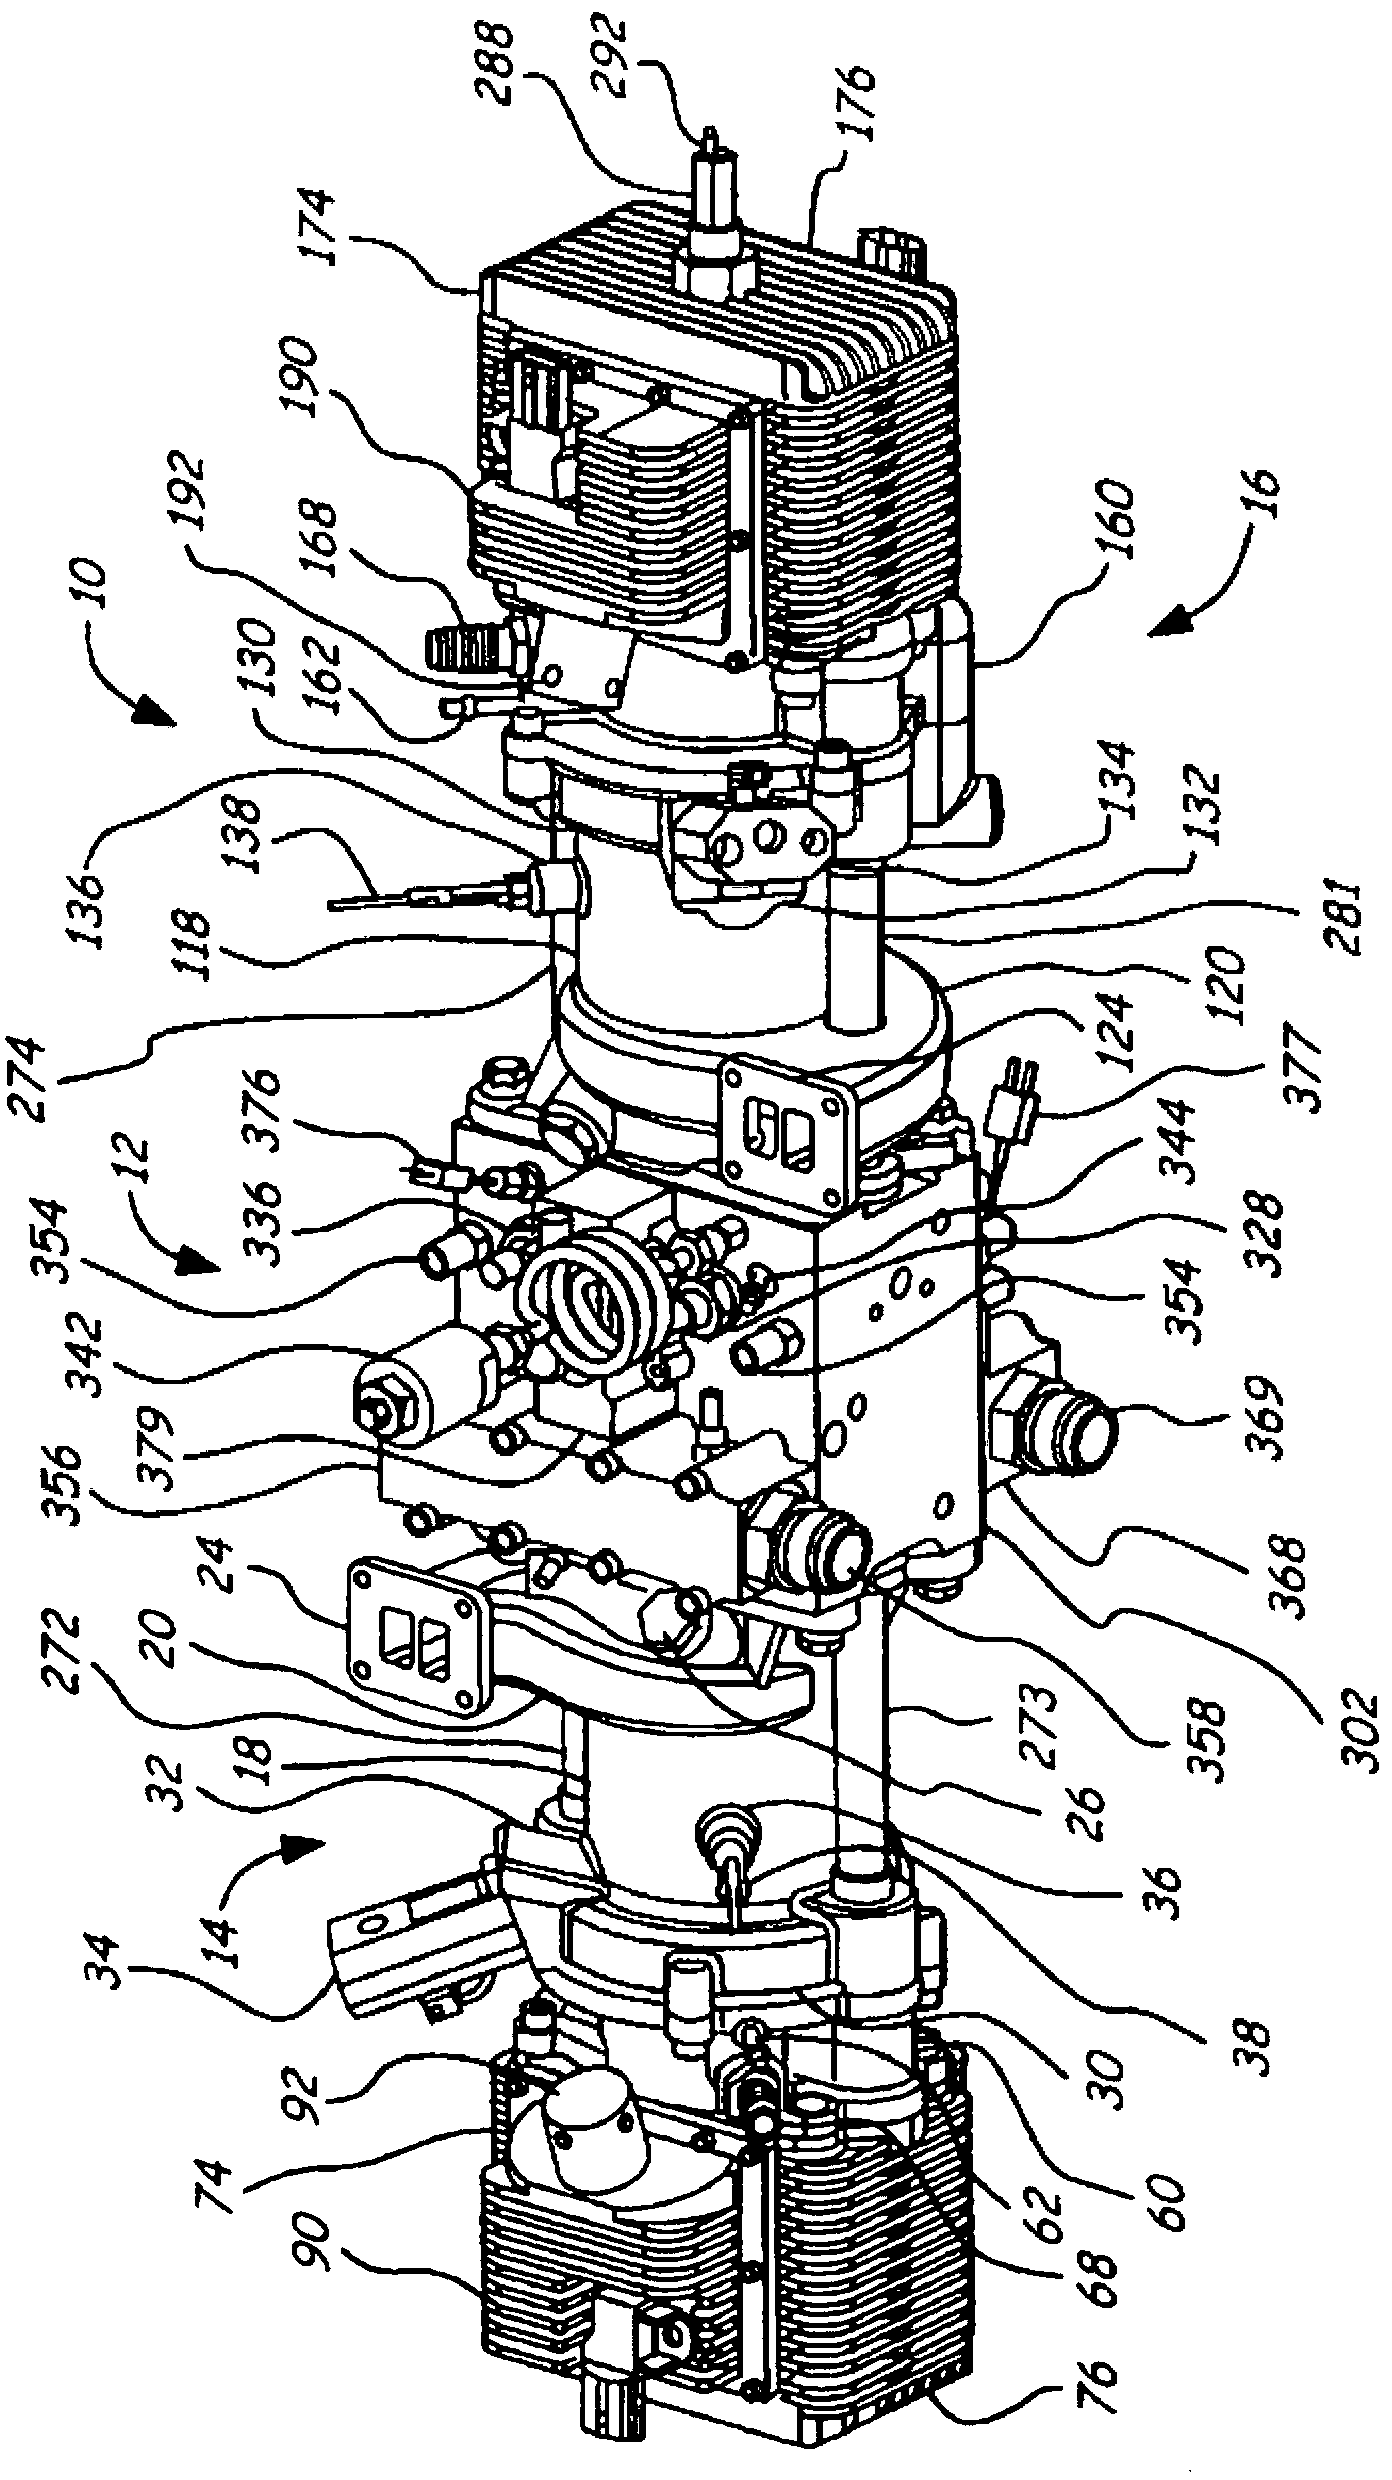 Position sensor of free piston engine